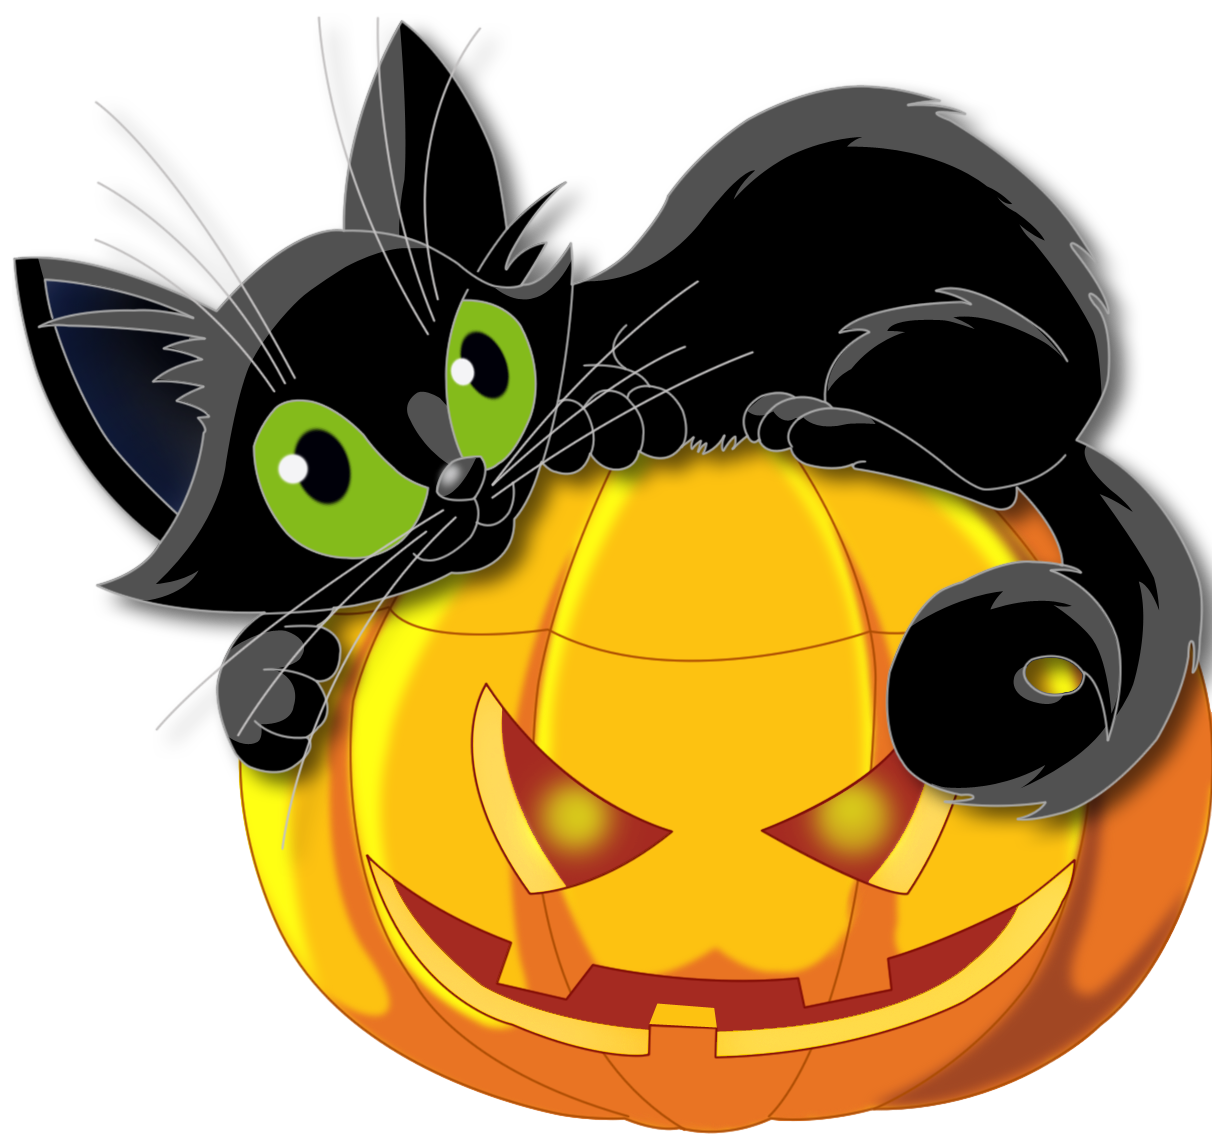 Halloween-black-cat-silhouett